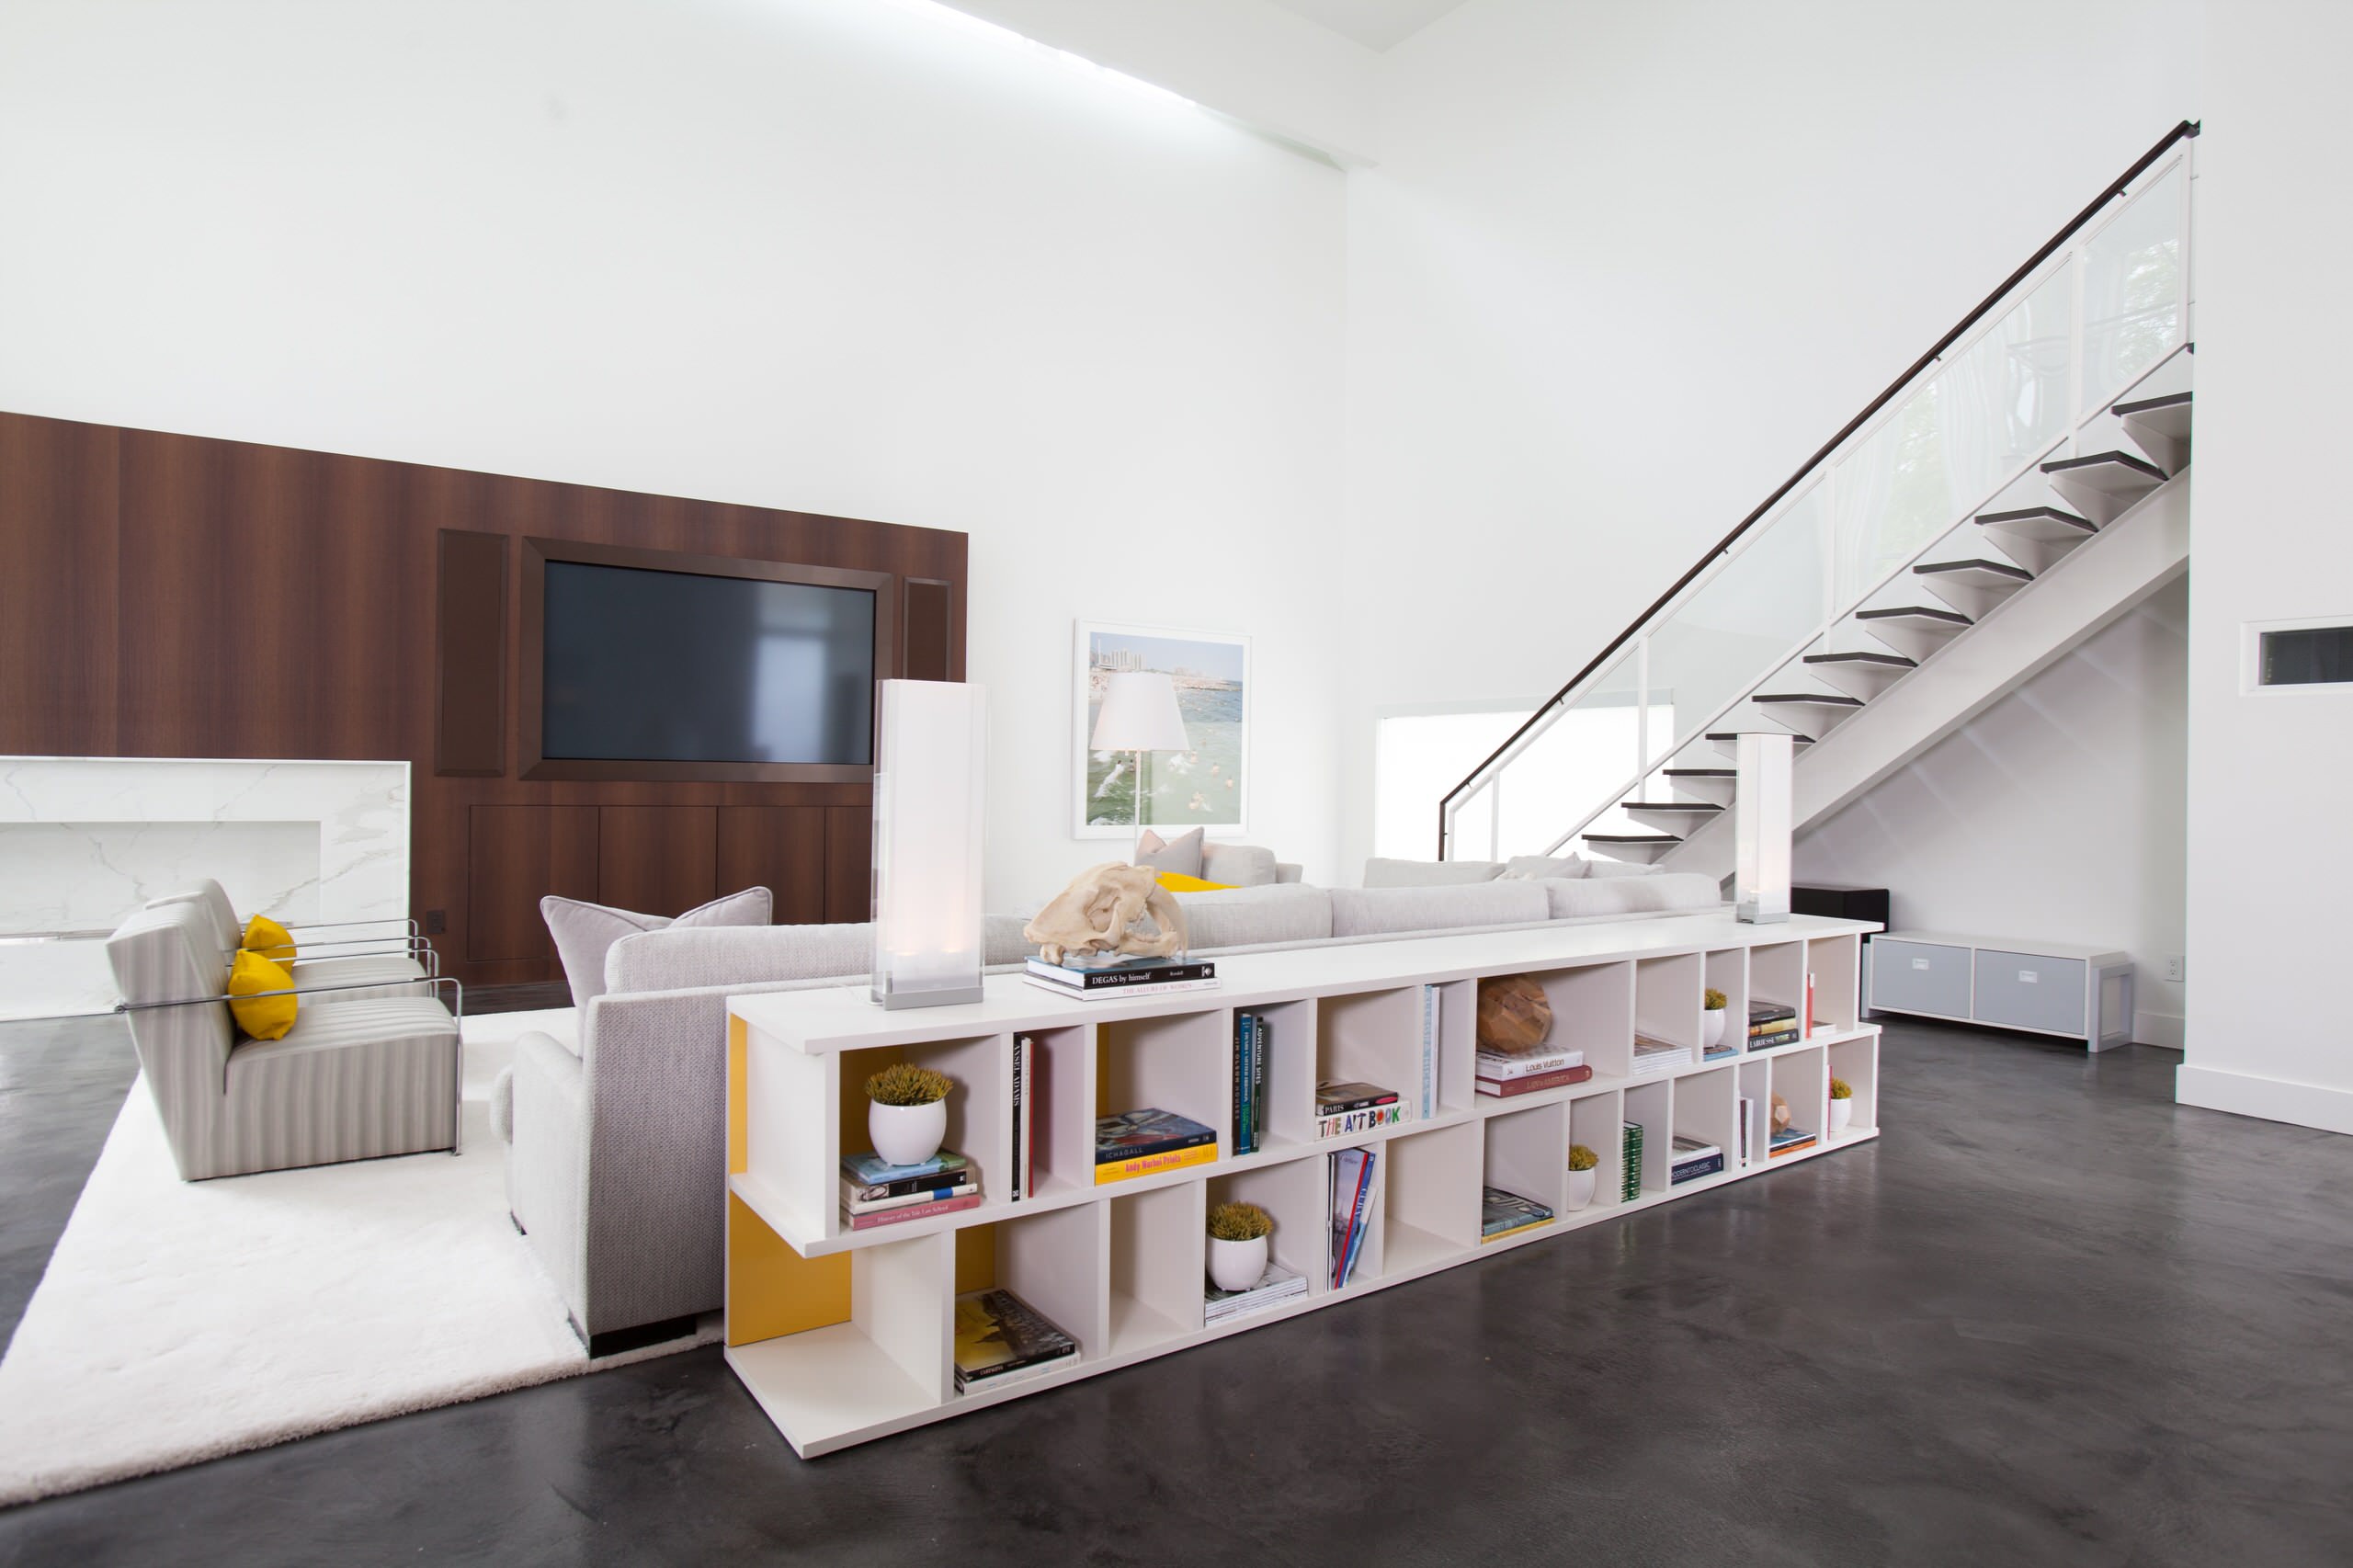 Bookshelf Behind Sofa - Photos & Ideas | Houzz